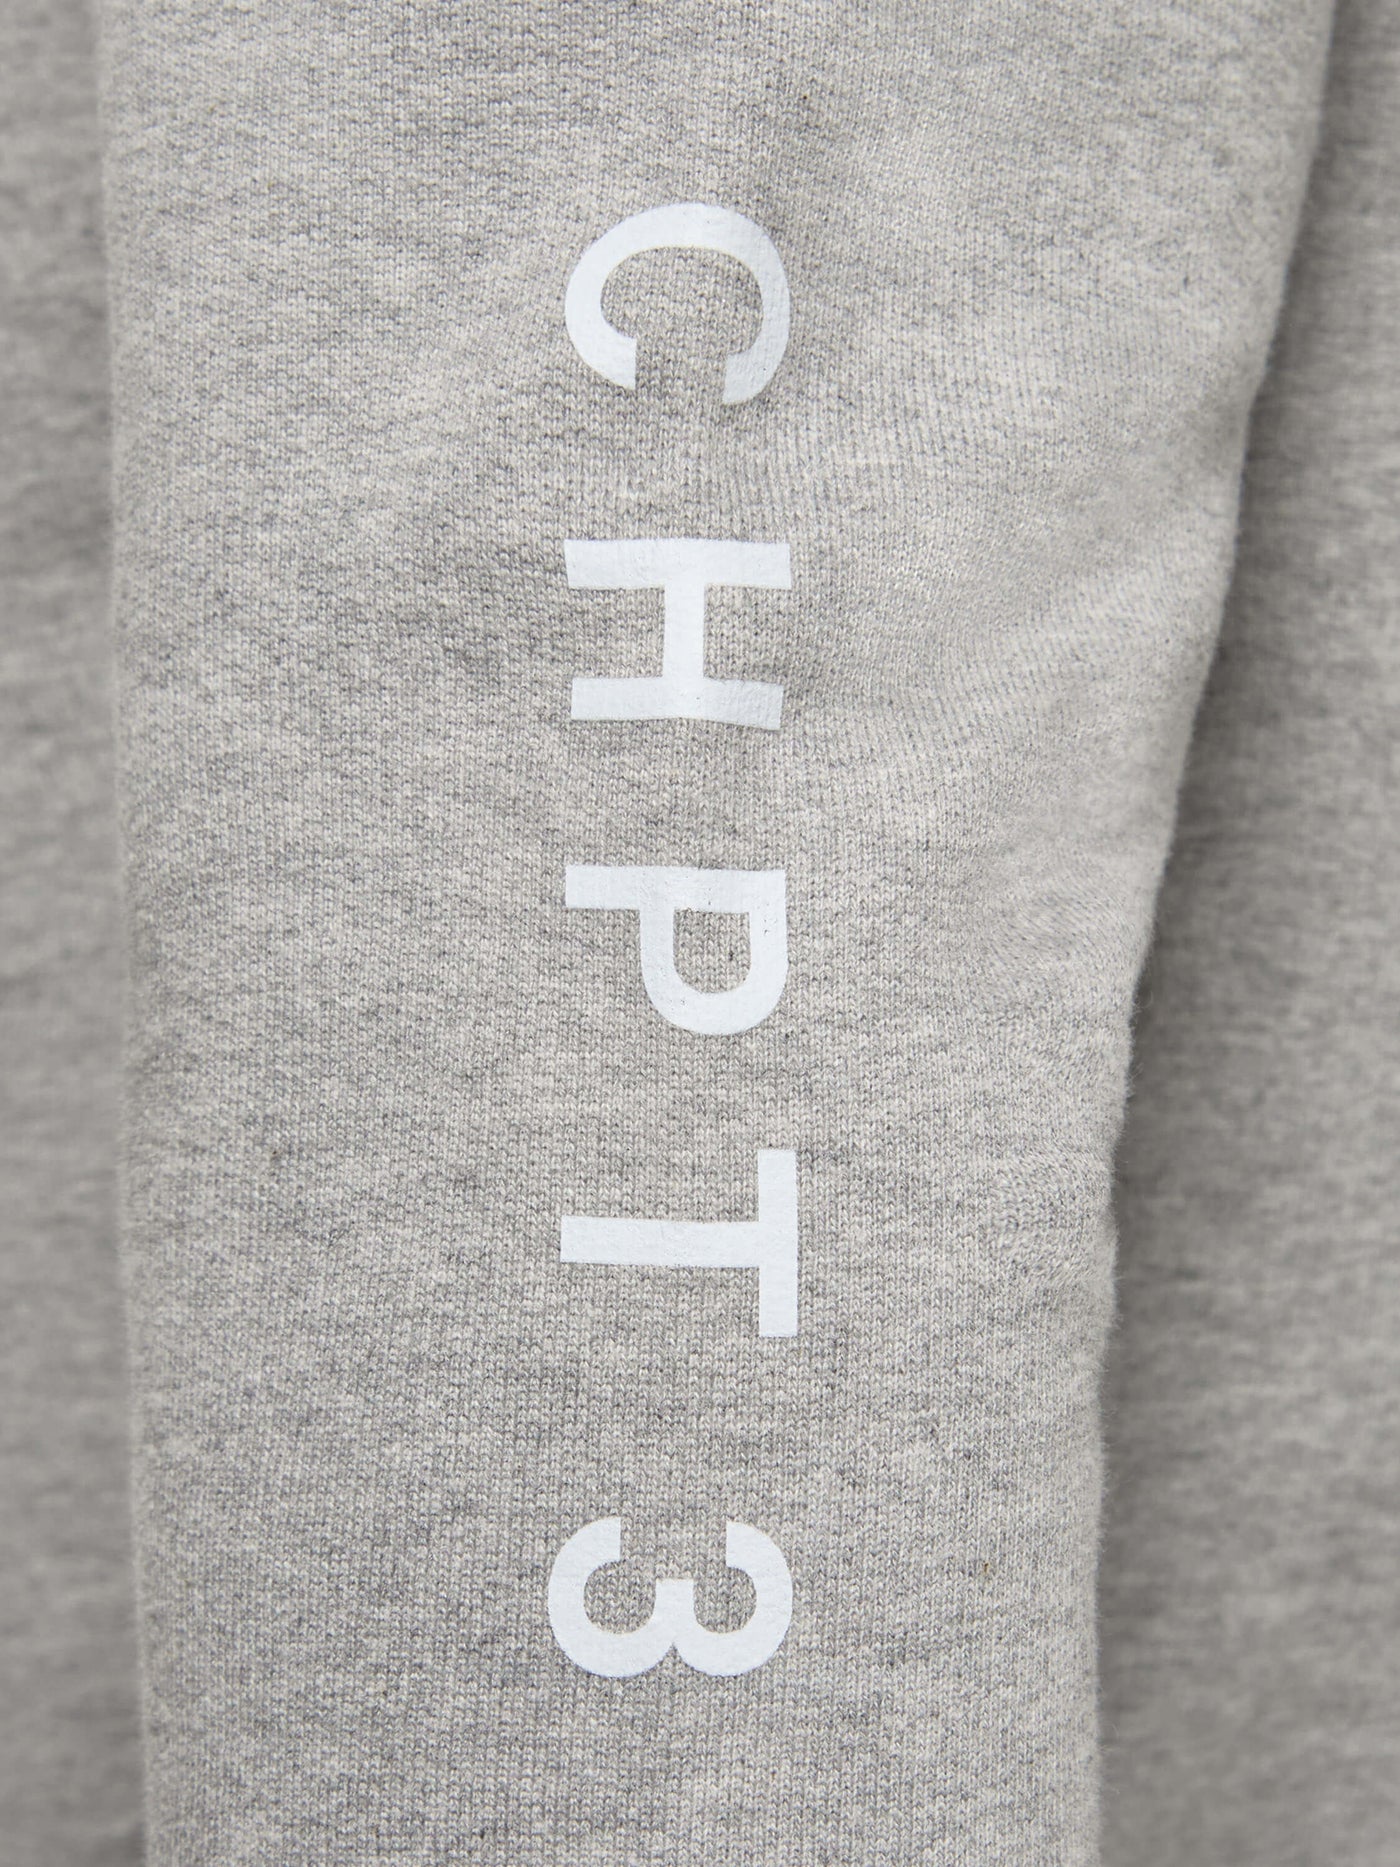 CHPT3 Elysée women's crewneck sweatshirt in grey, close up view of sleeve print #color_grey-marl  